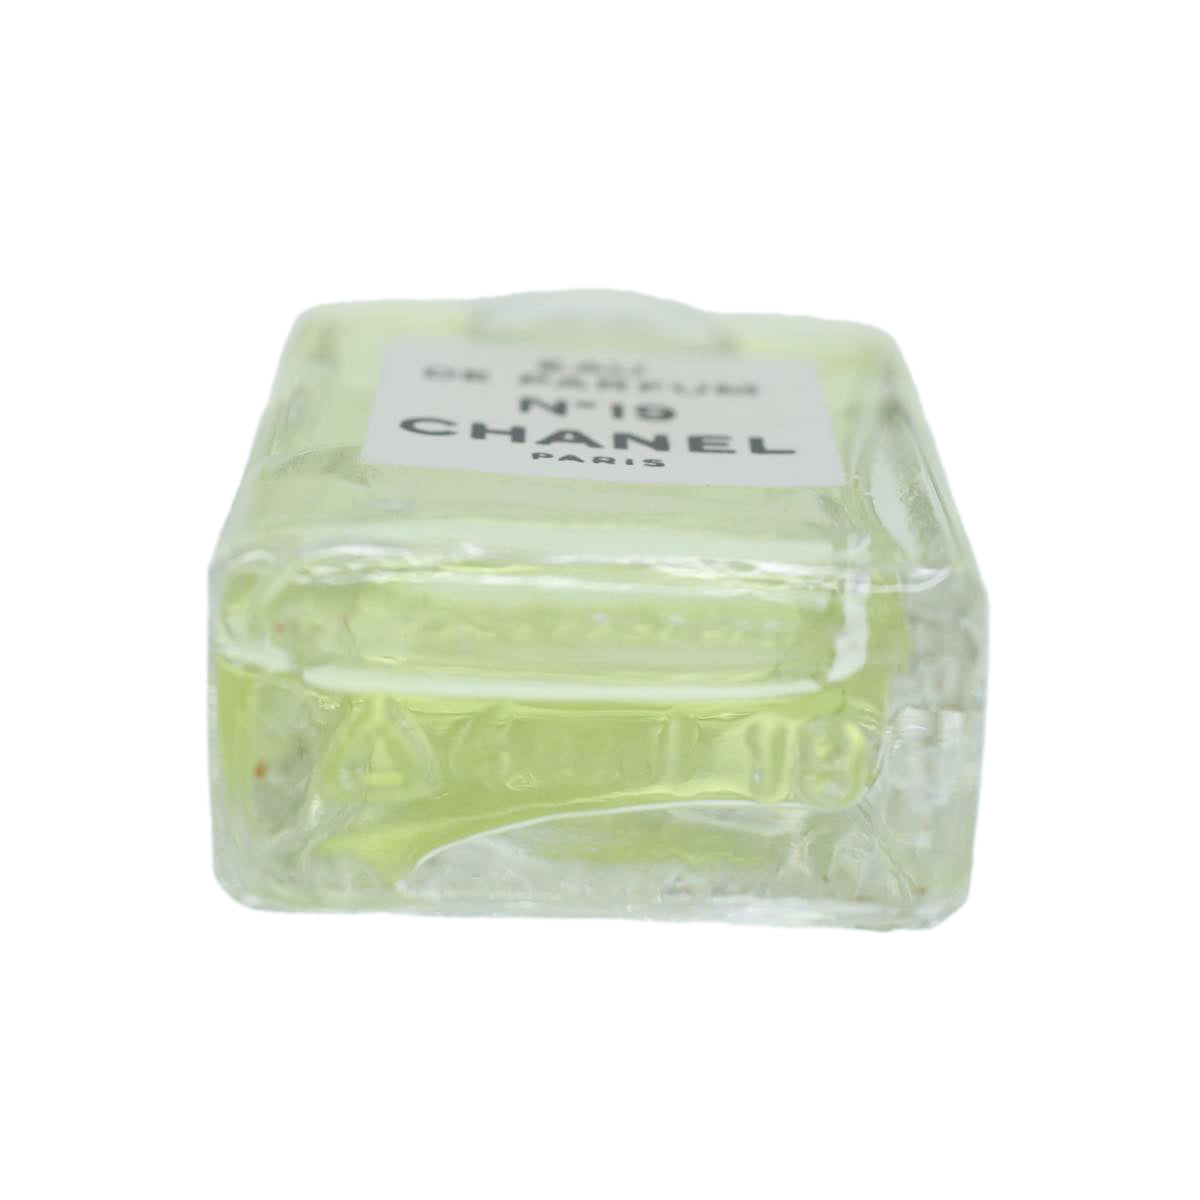 CHANEL Perfume N°19 Necklace Metal Gold Tone Black CC Auth ar9340B